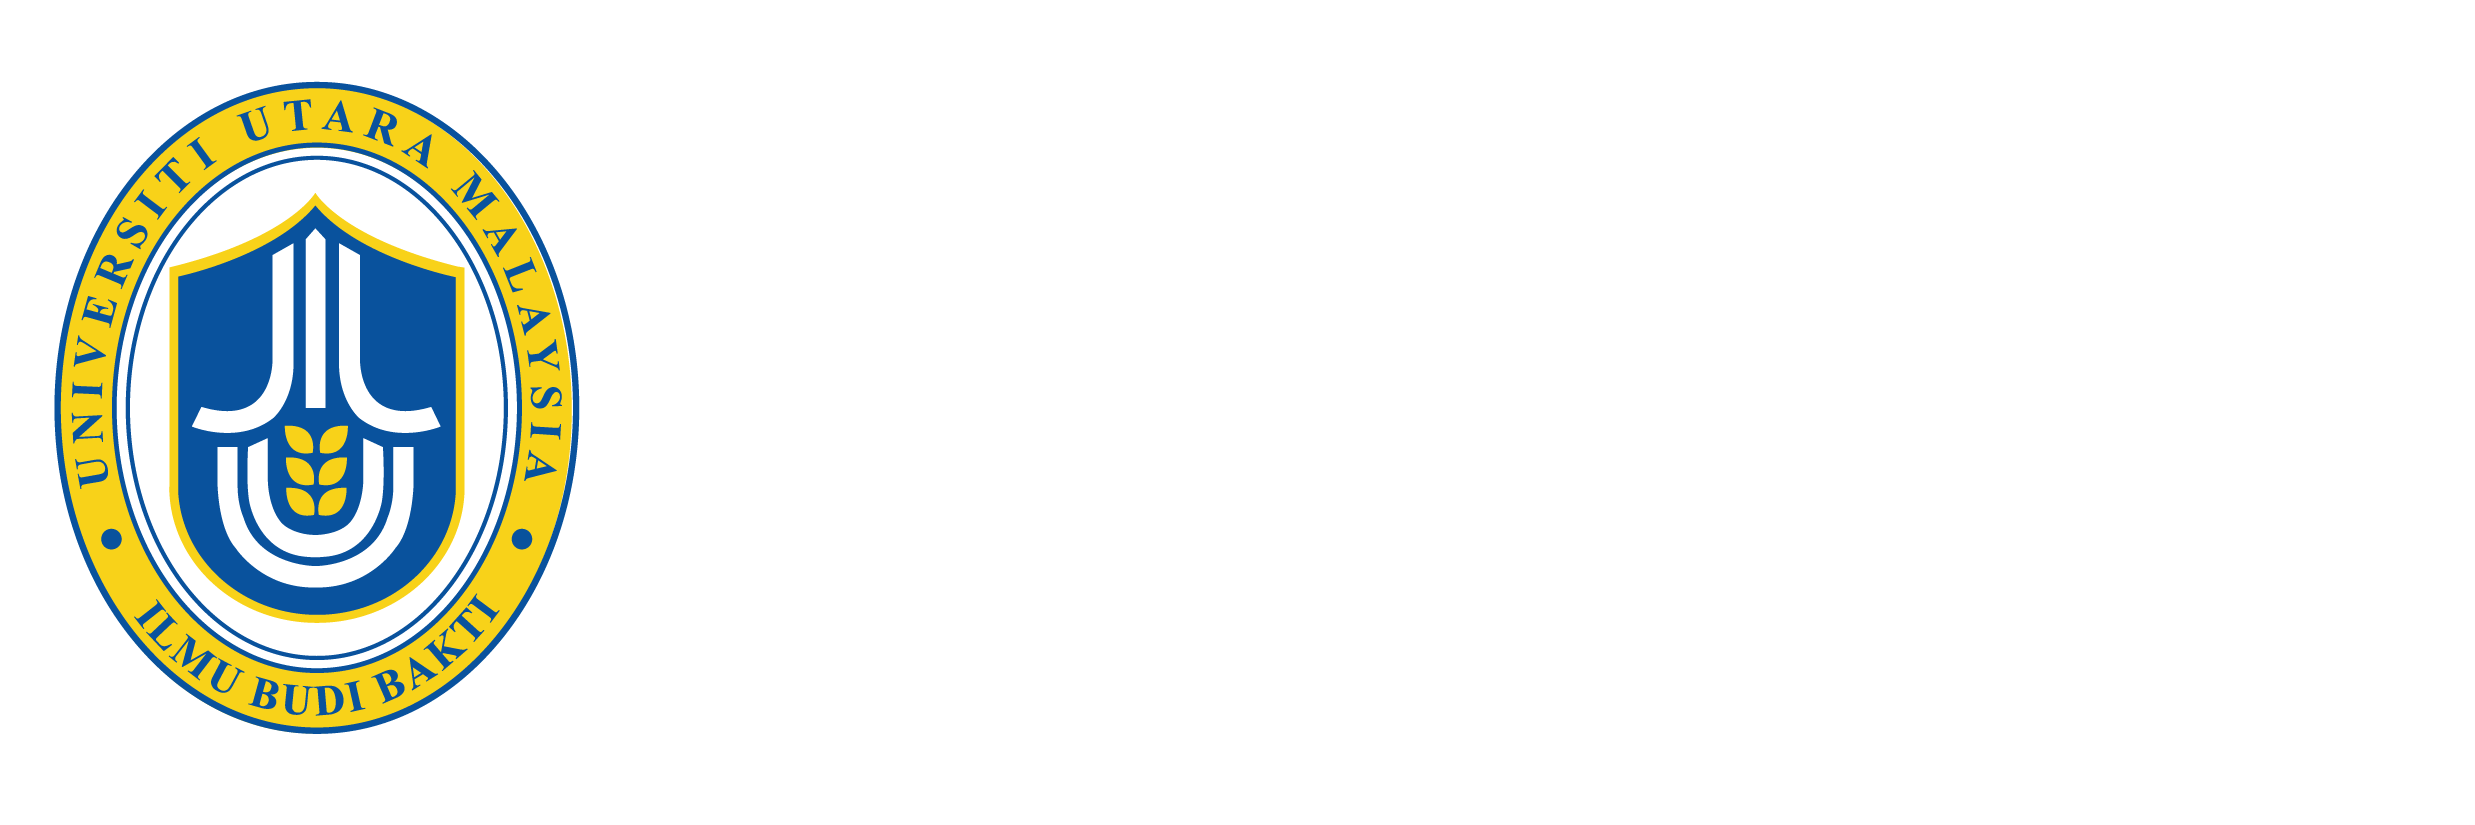 School of Multimedia Technology & Communication (SMMTC)